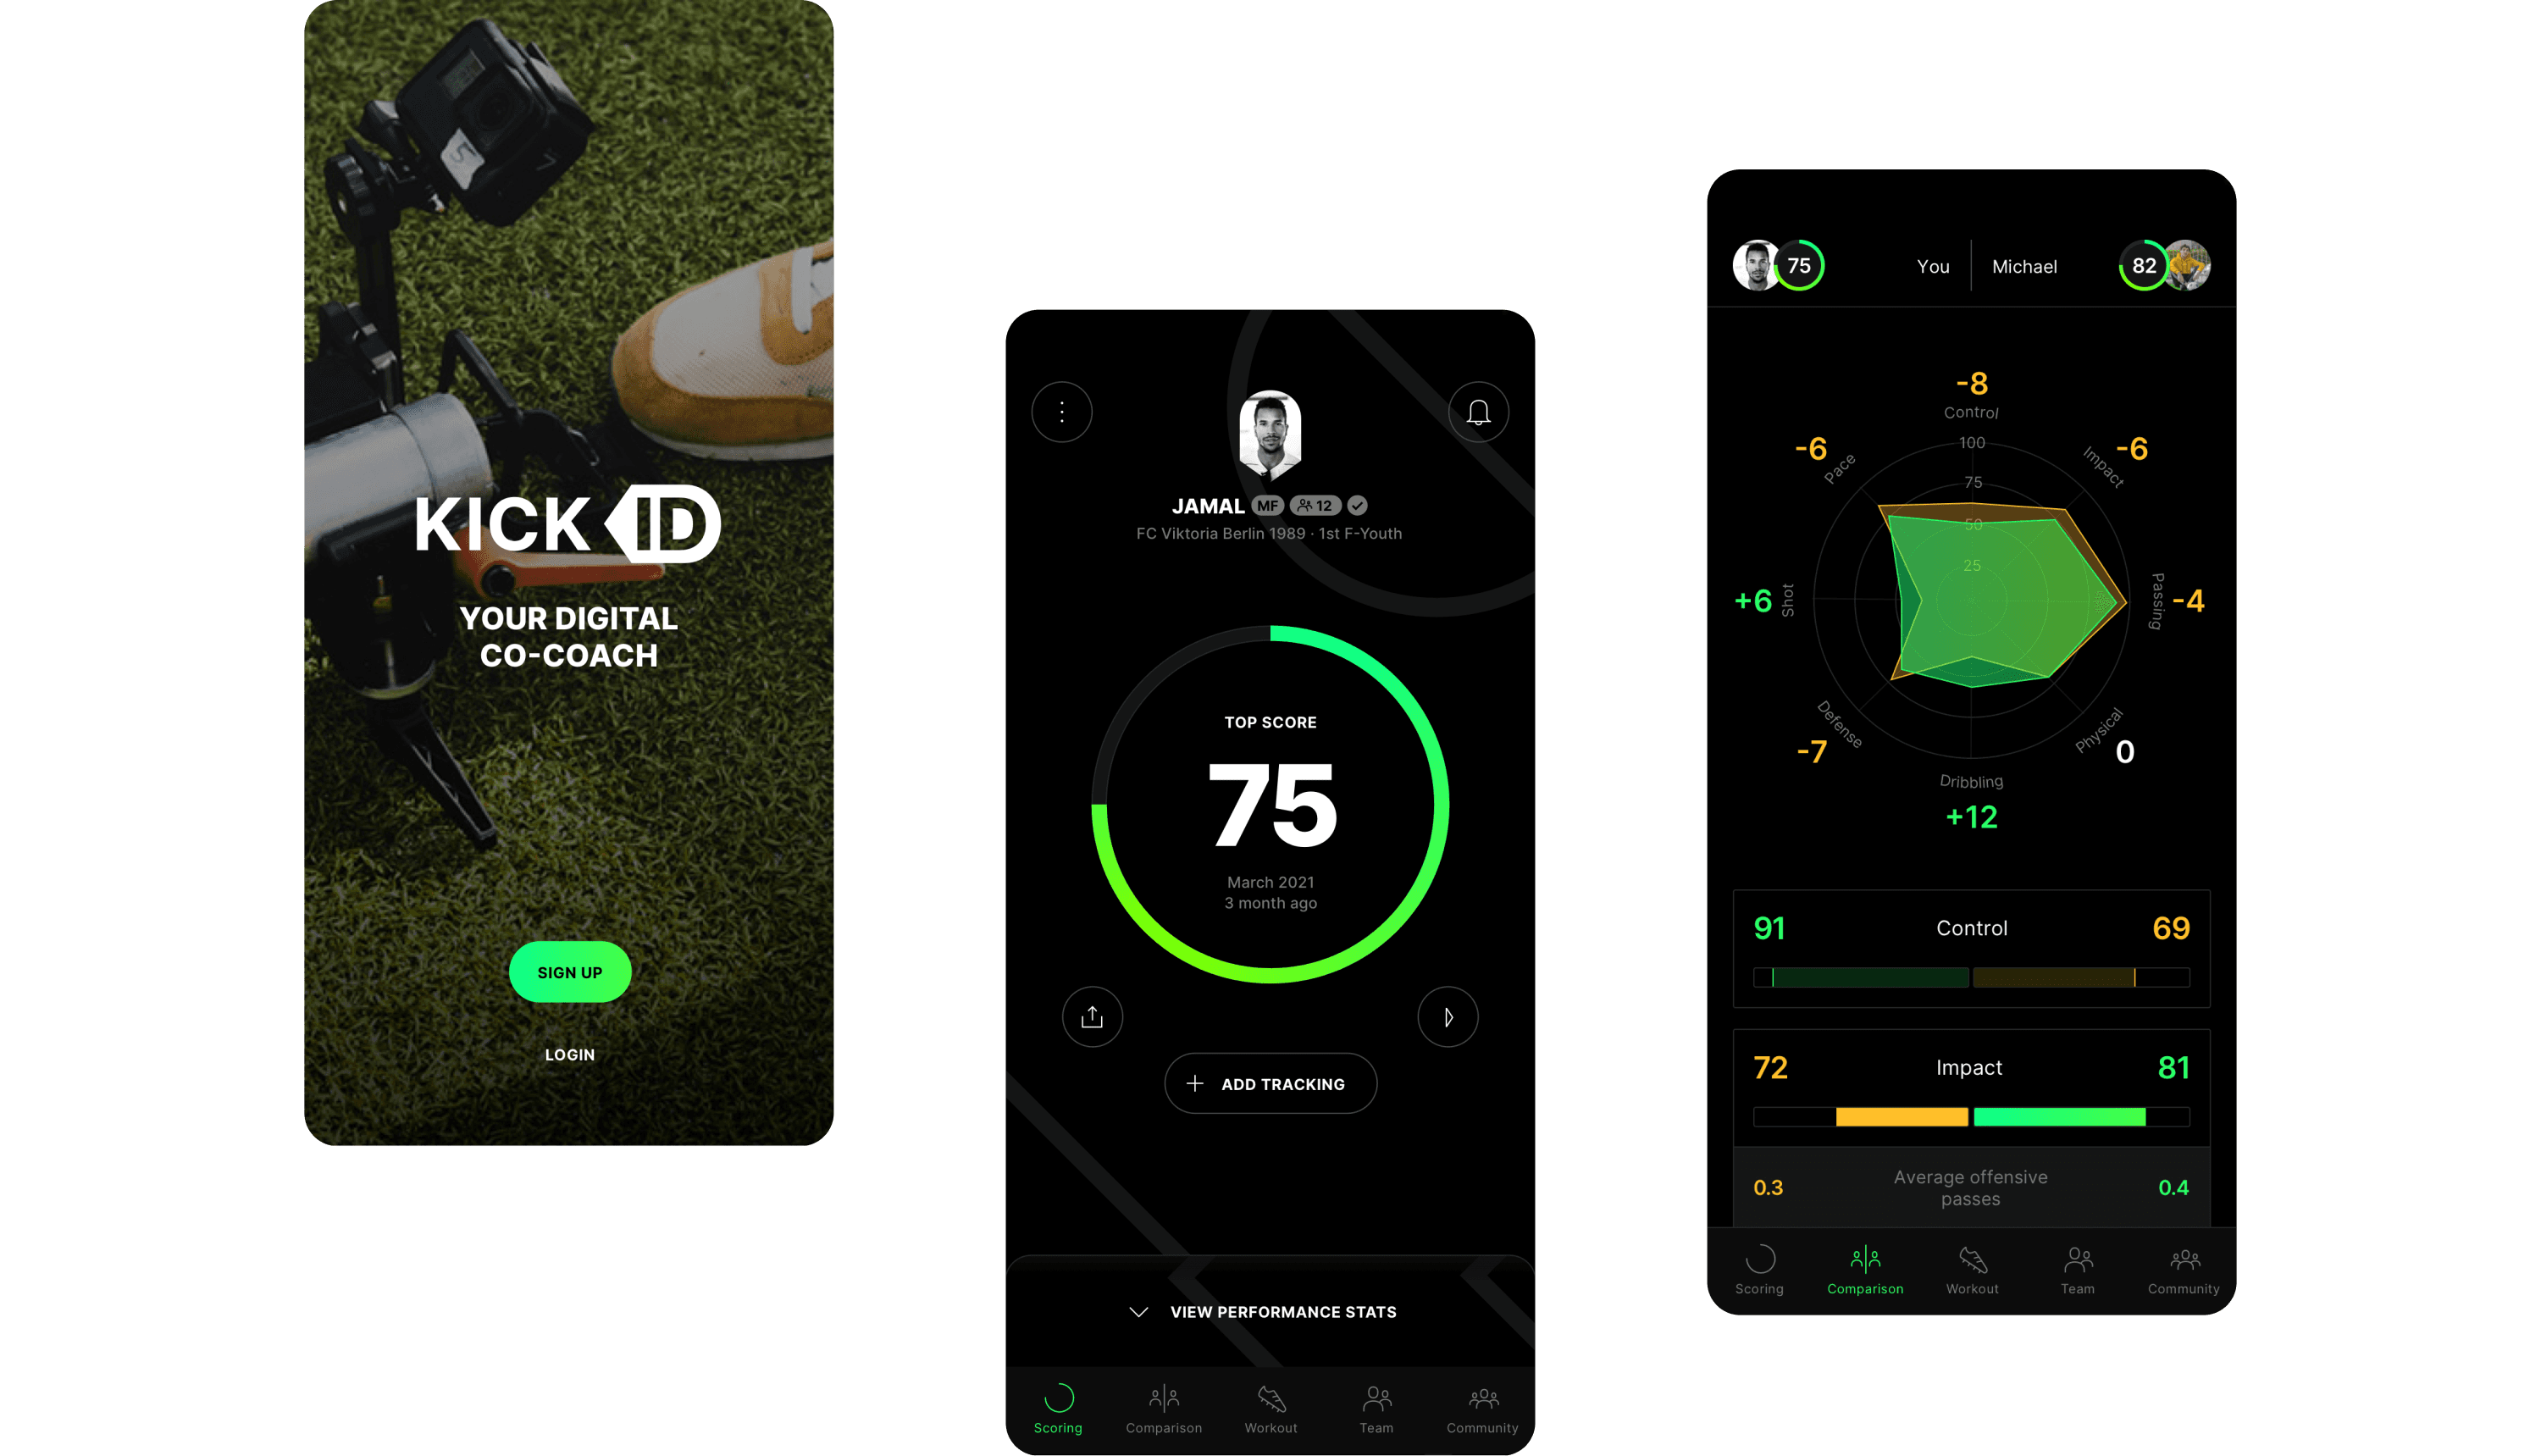 An image showing a few key screens of the Kick ID app.